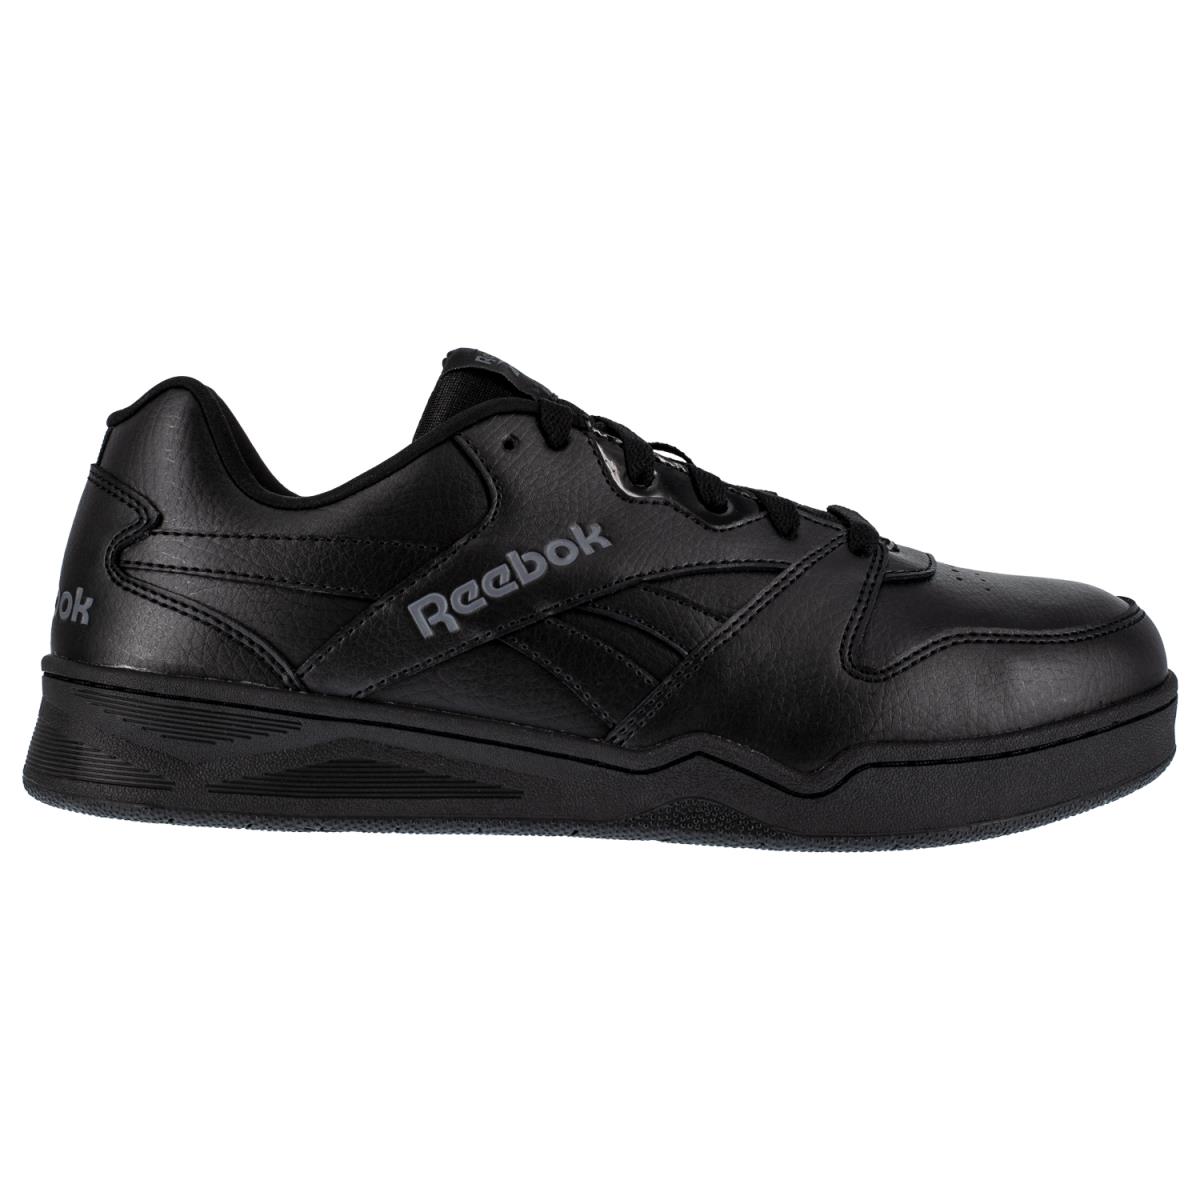 Reebok Mens Black Leather Work Shoes Low Cut Sneaker CT M